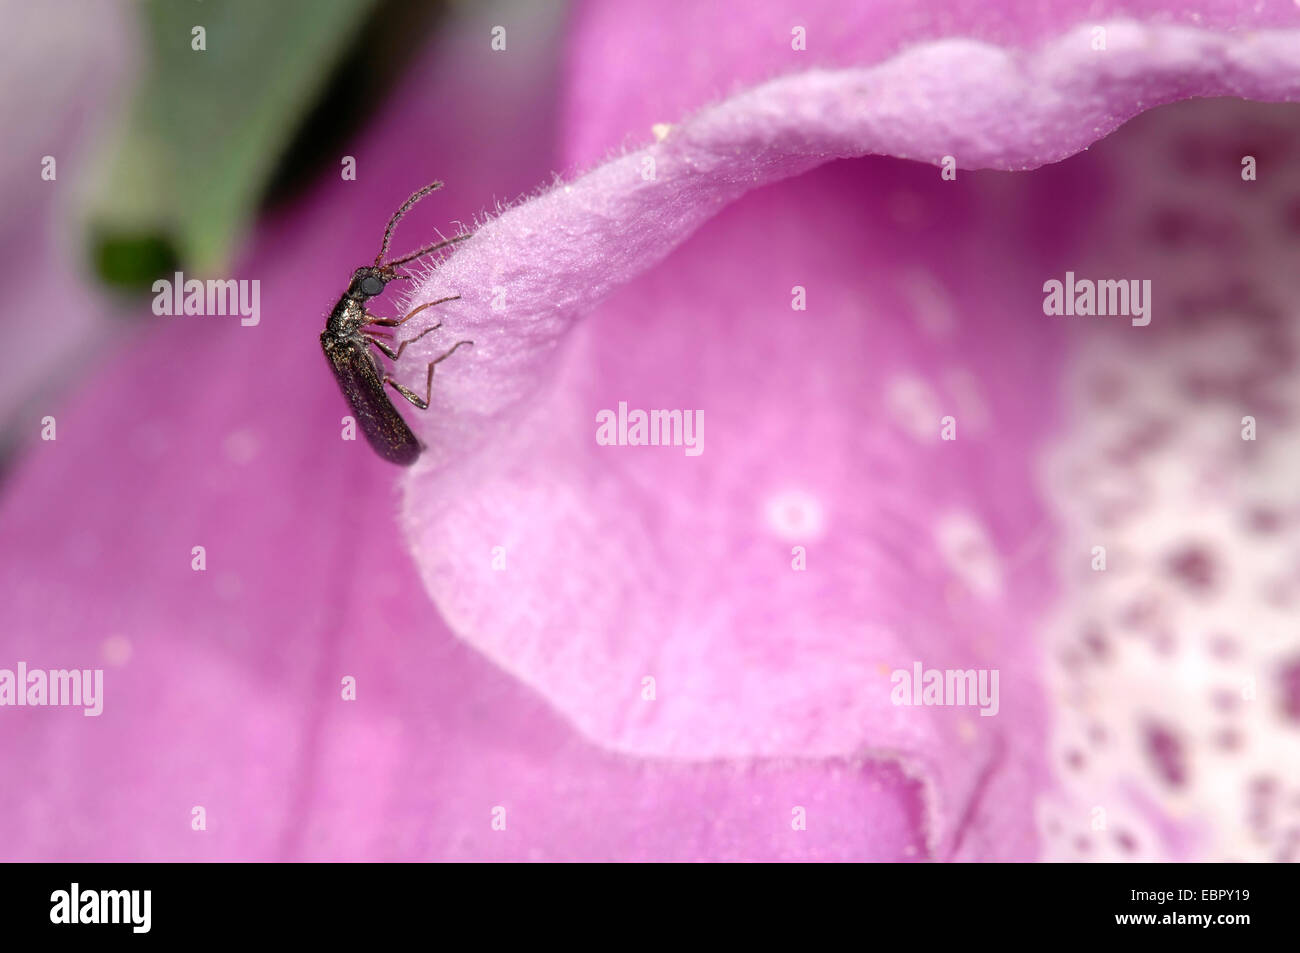 Dasytes plumbeus (Dasytes plumbeus), tiny beetle on blossom, Germany Stock Photo